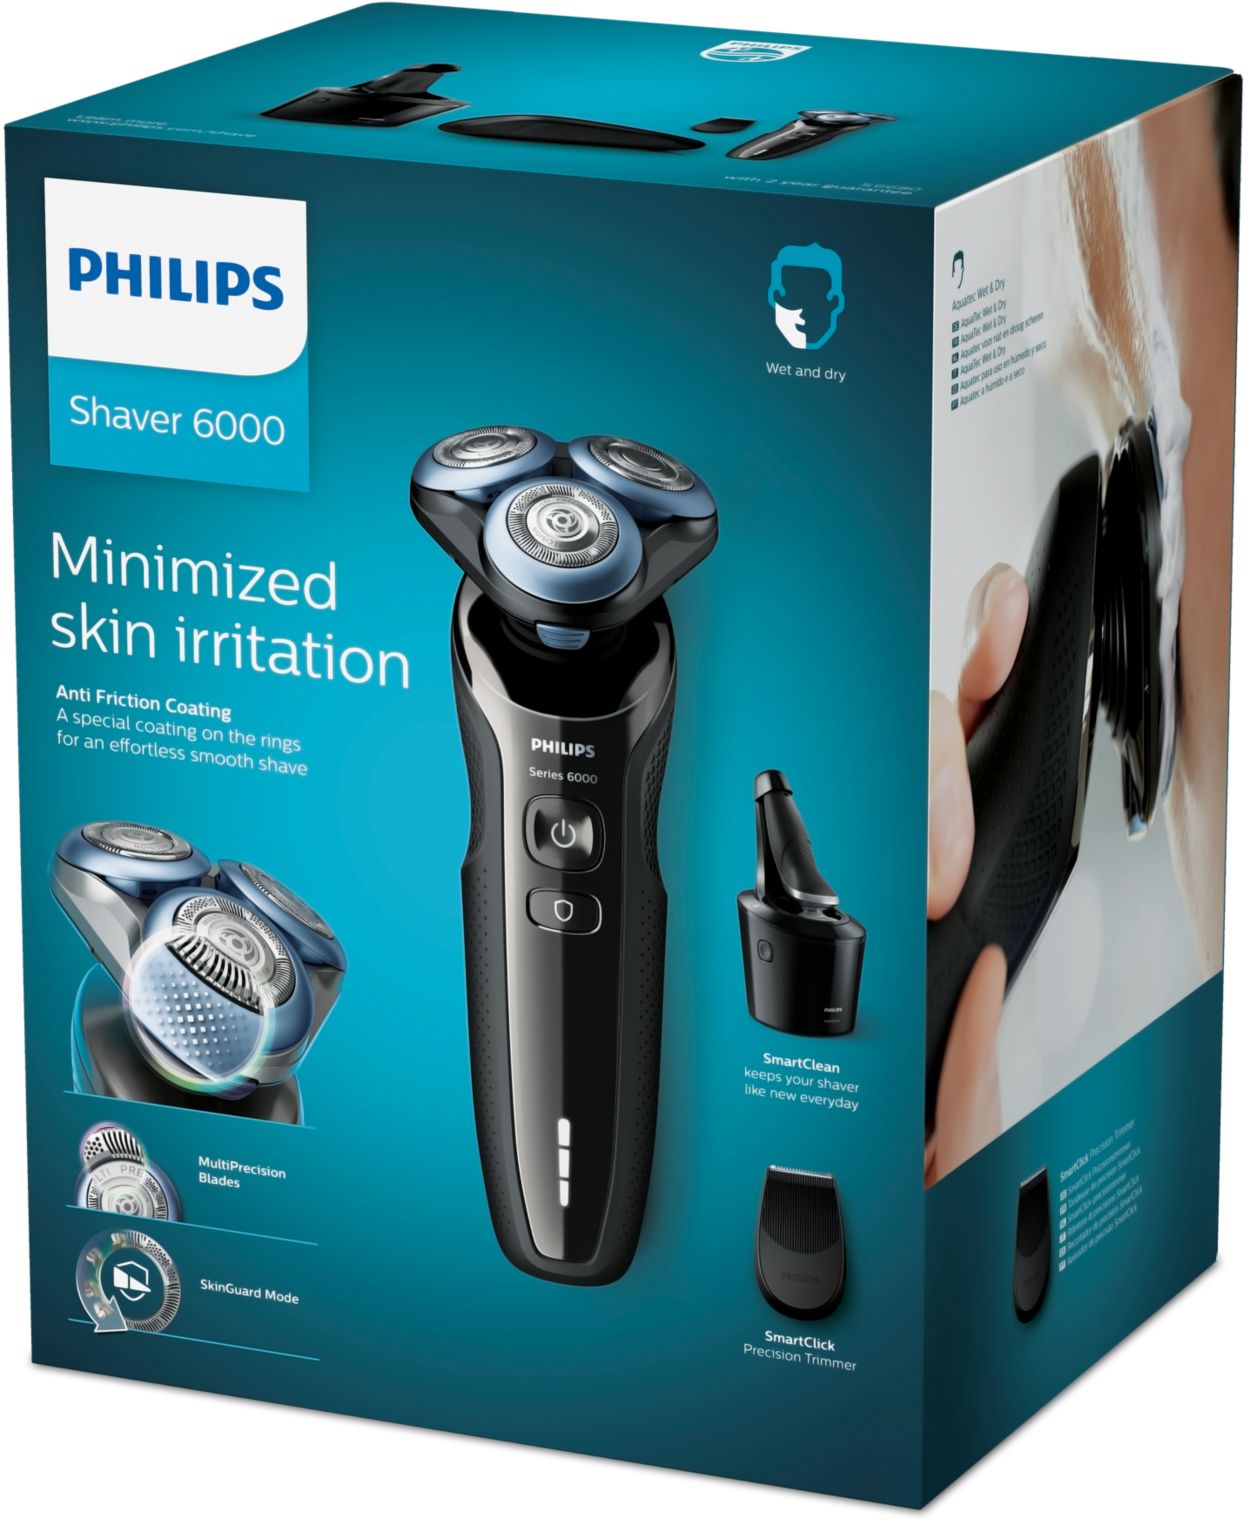 Philips 6000 series